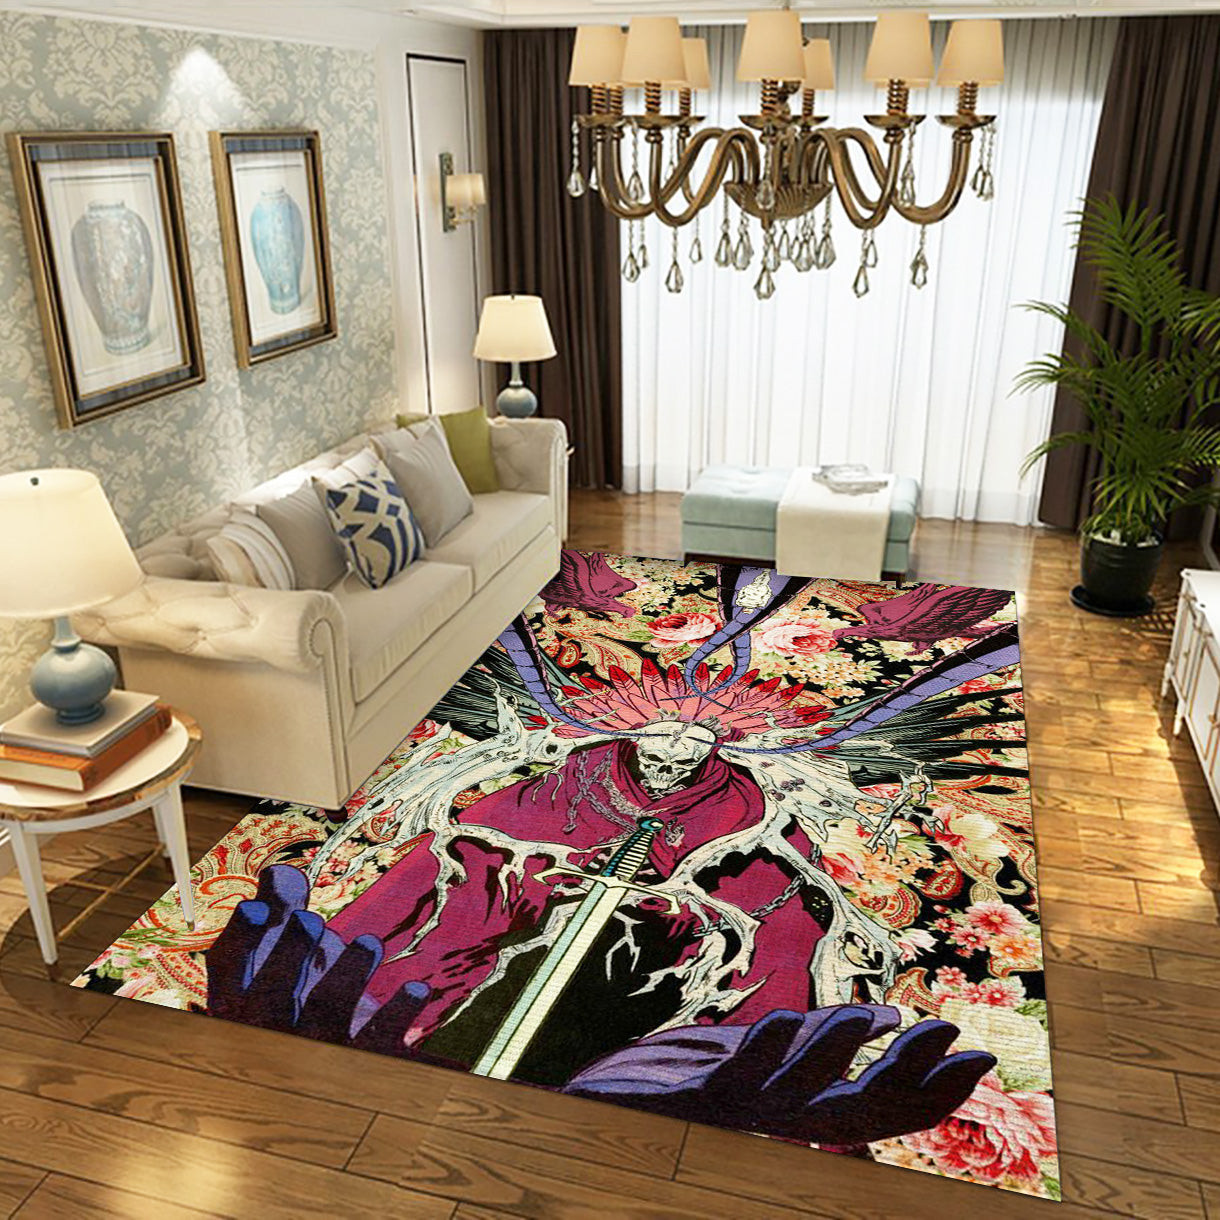 Symphony Of Darkness Movie Area Rug, Living Room And Bedroom Rug – Carpet Floor Decor – Indoor Outdoor Rugs